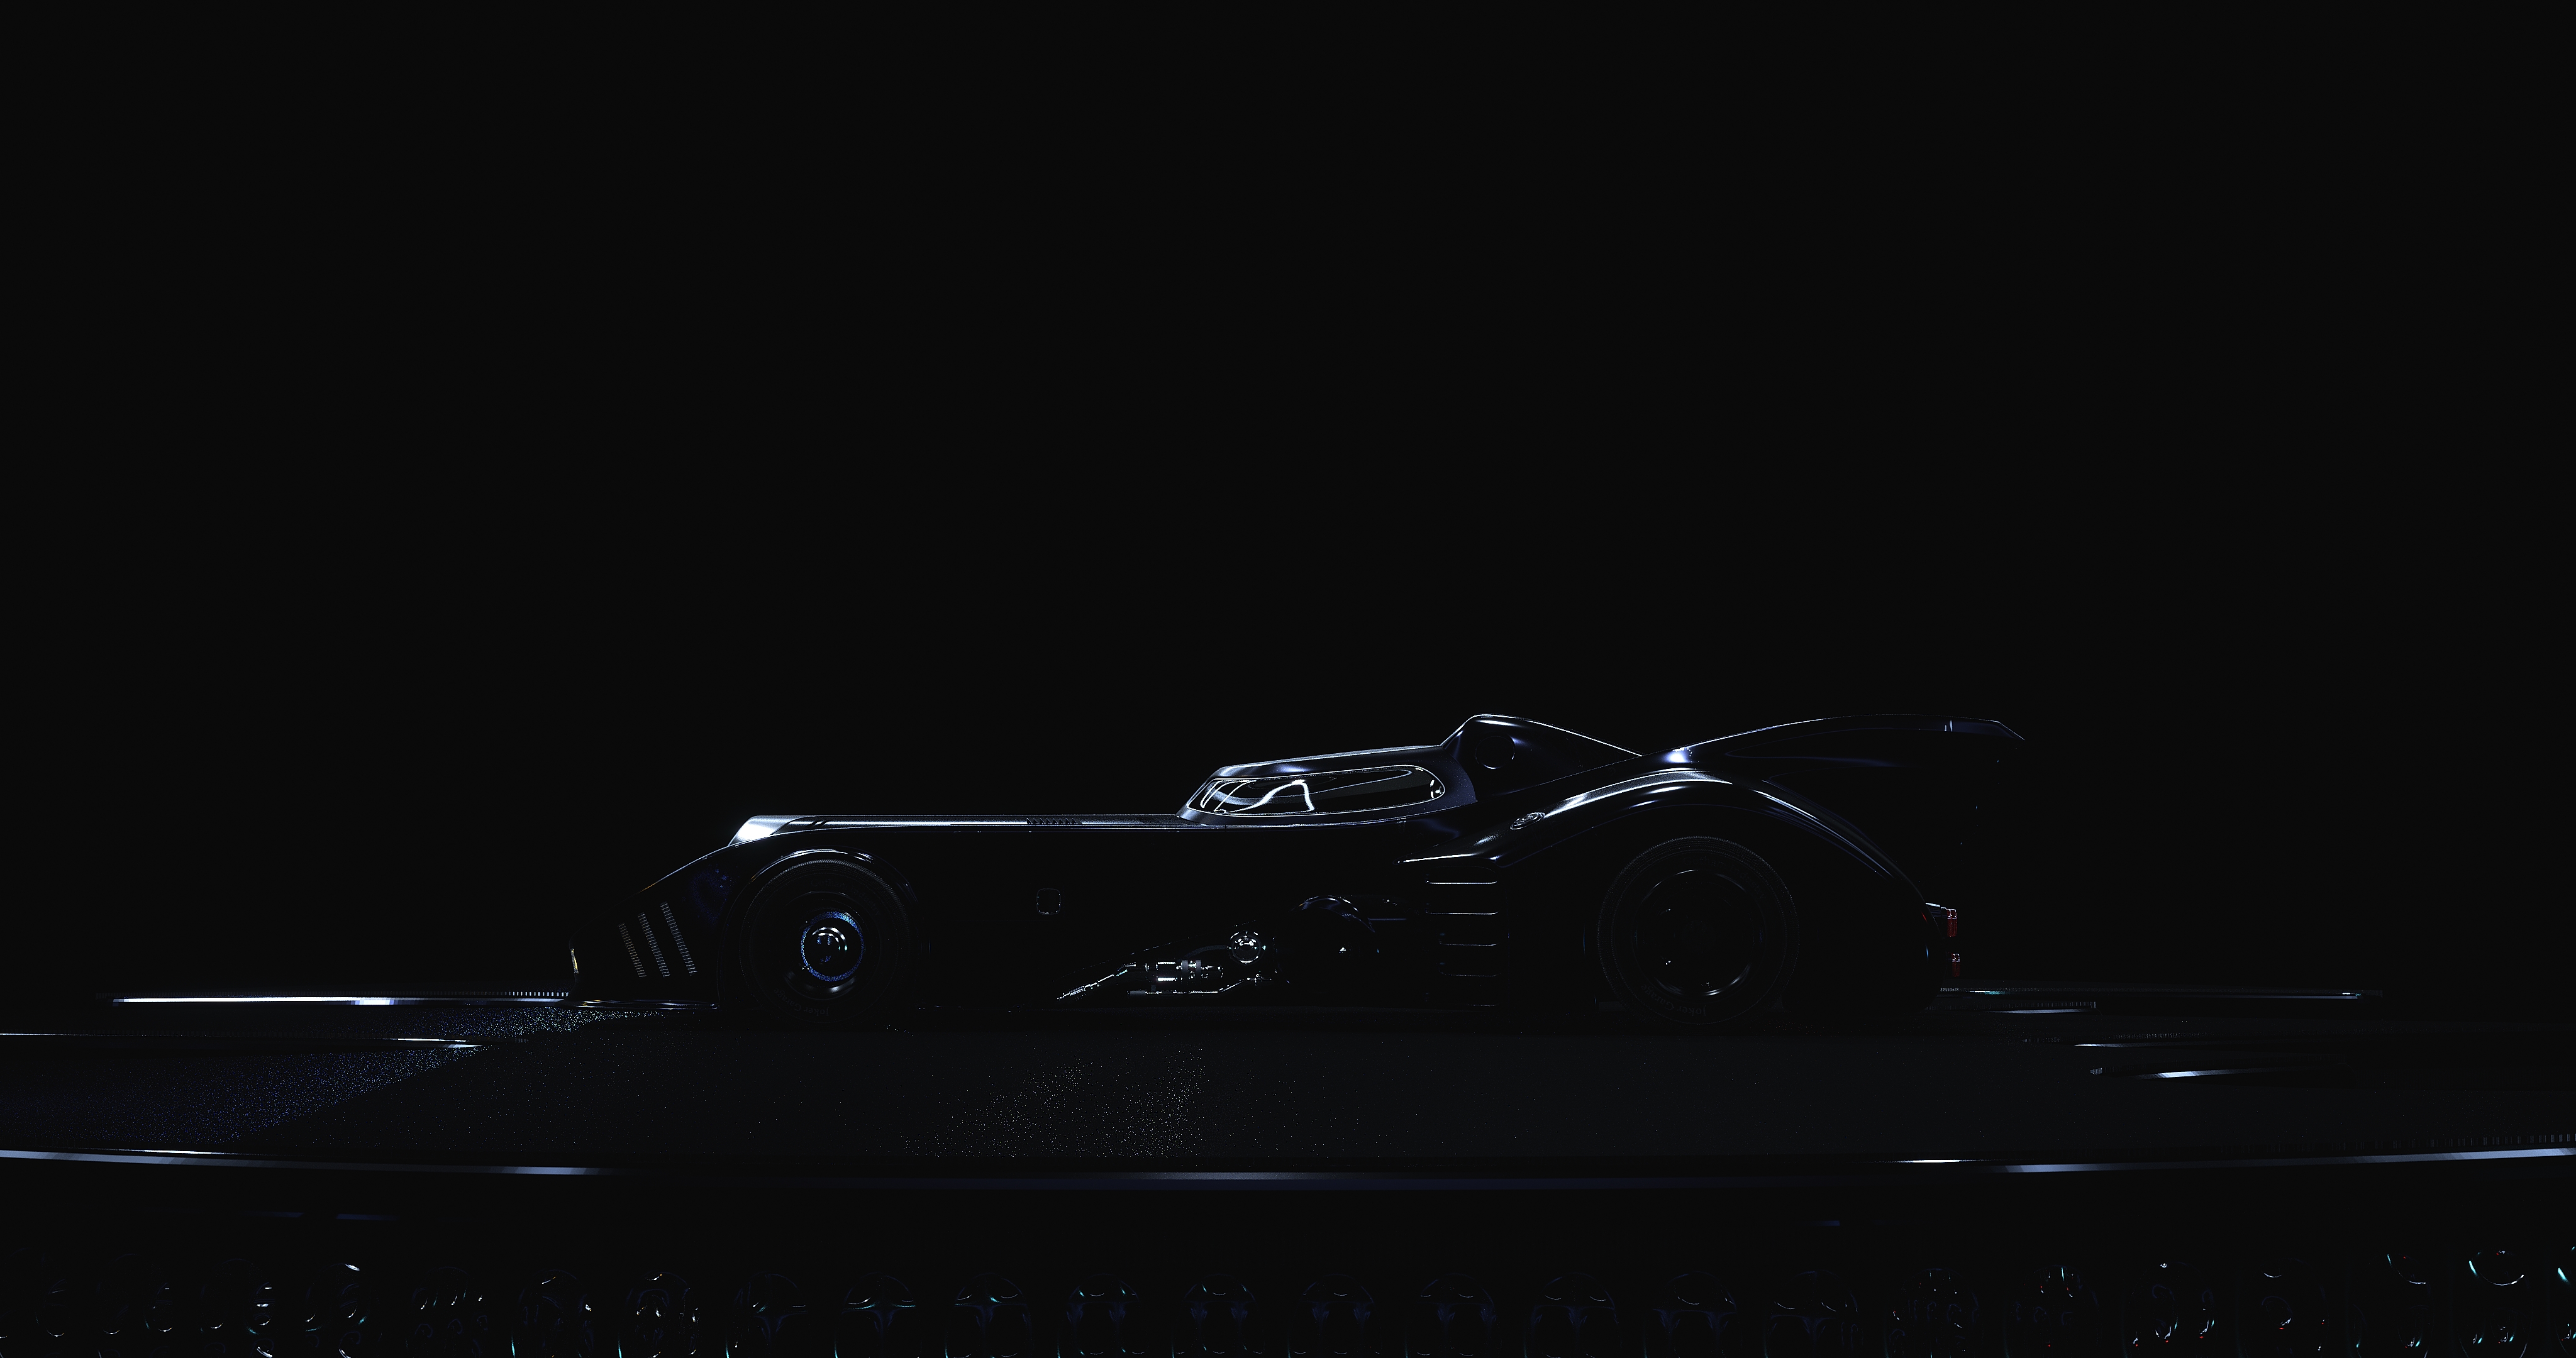 General 4096x2160 Batman (1989) Batman (2021) Batmobile dark background car wheels vehicle engine tires custom-made